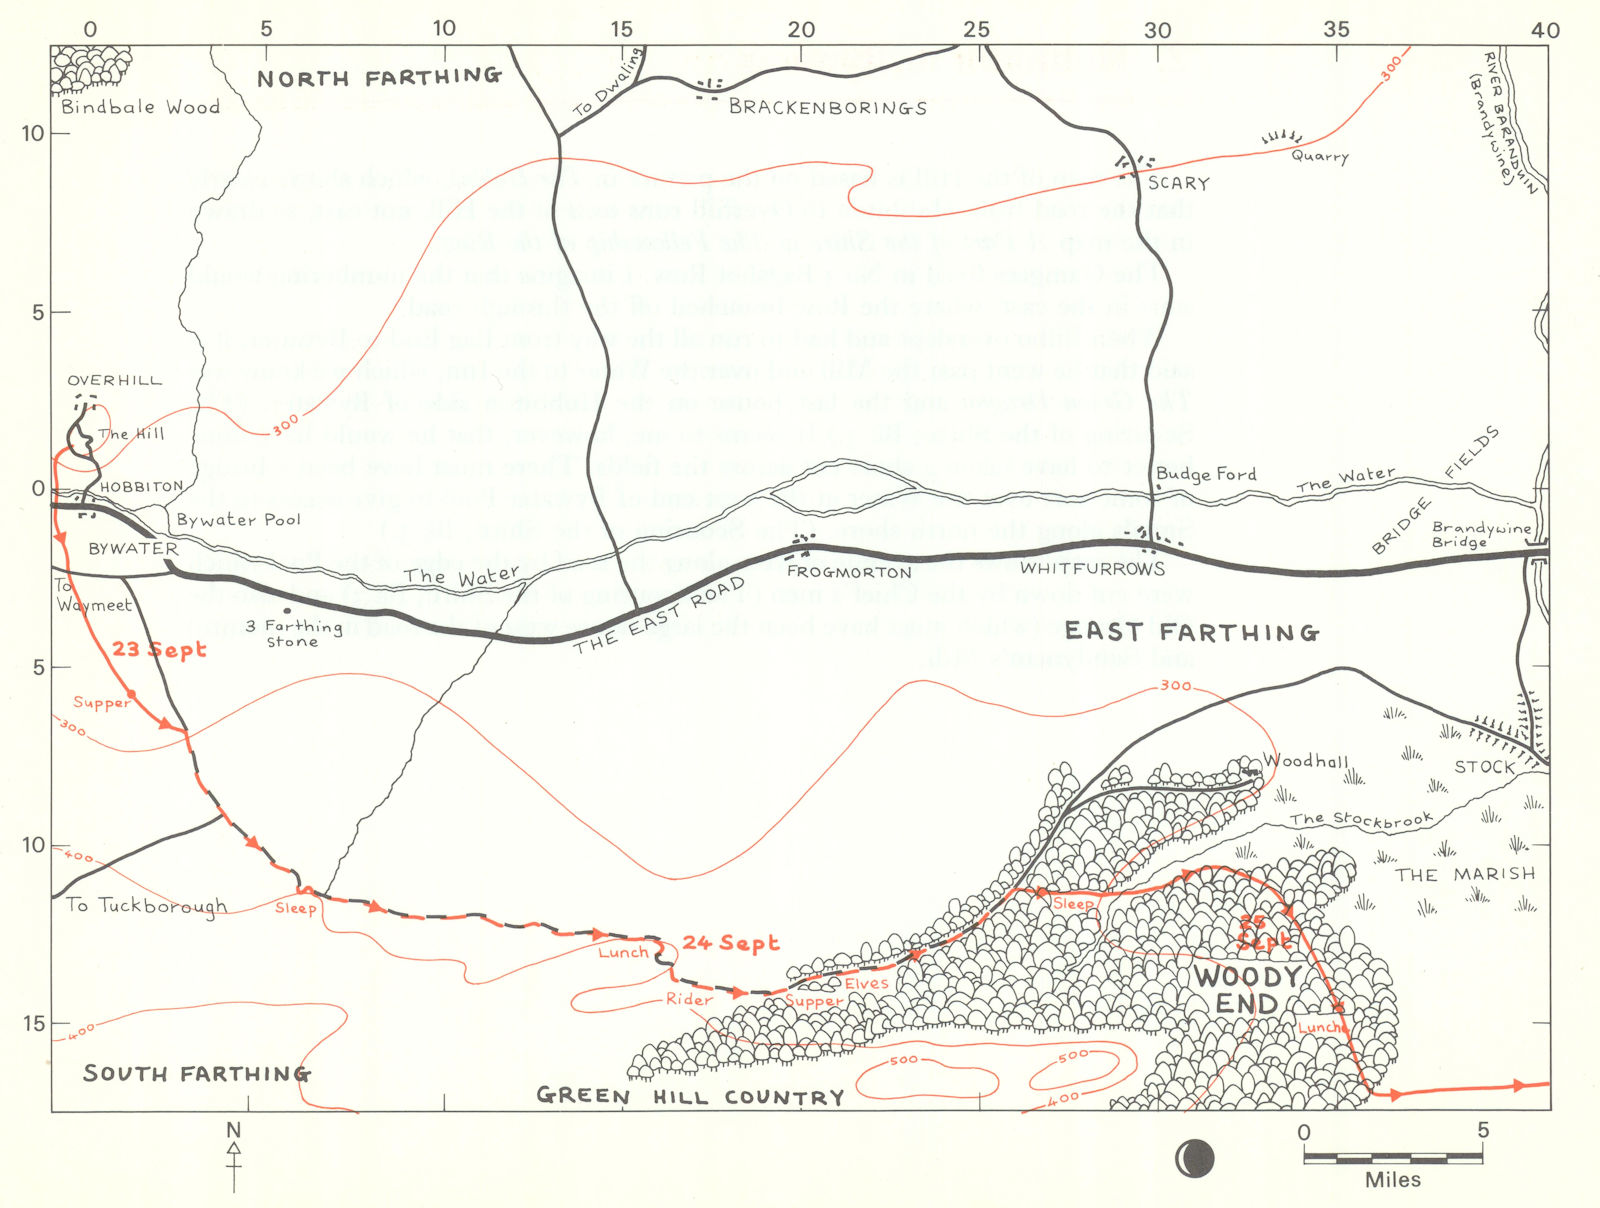 MIDDLE-EARTH Hobbiton-Brandywine Bridge. Frodo route. TOLKIEN/STRACHEY 1981 map